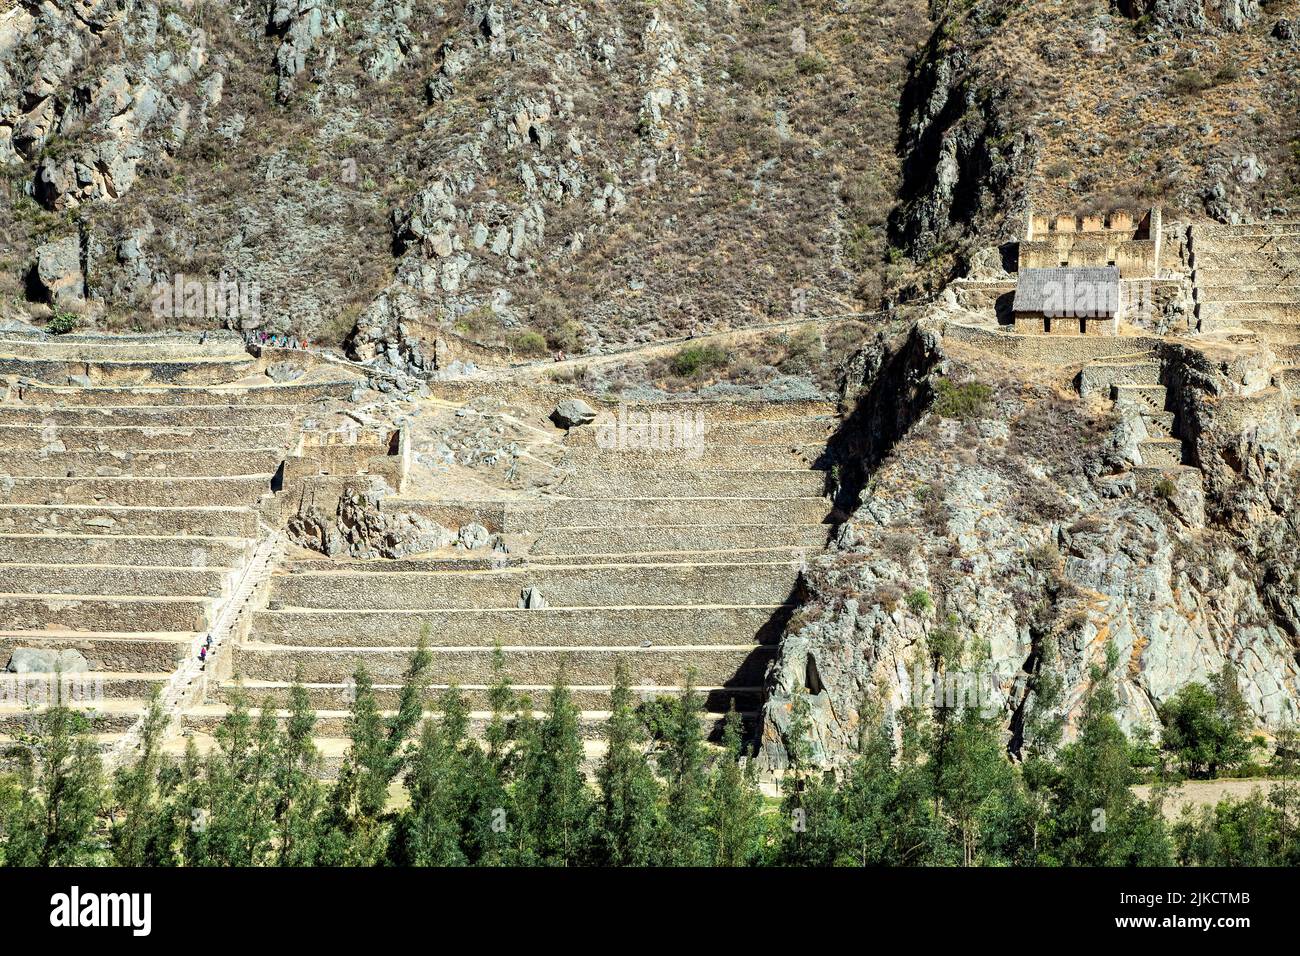 Lagerhäuser und landwirtschaftliche Terrassen, Inka-Ruinen von Ollantaytambo, Ollantaytambo, Urubamba, Cusco, Peru Stockfoto